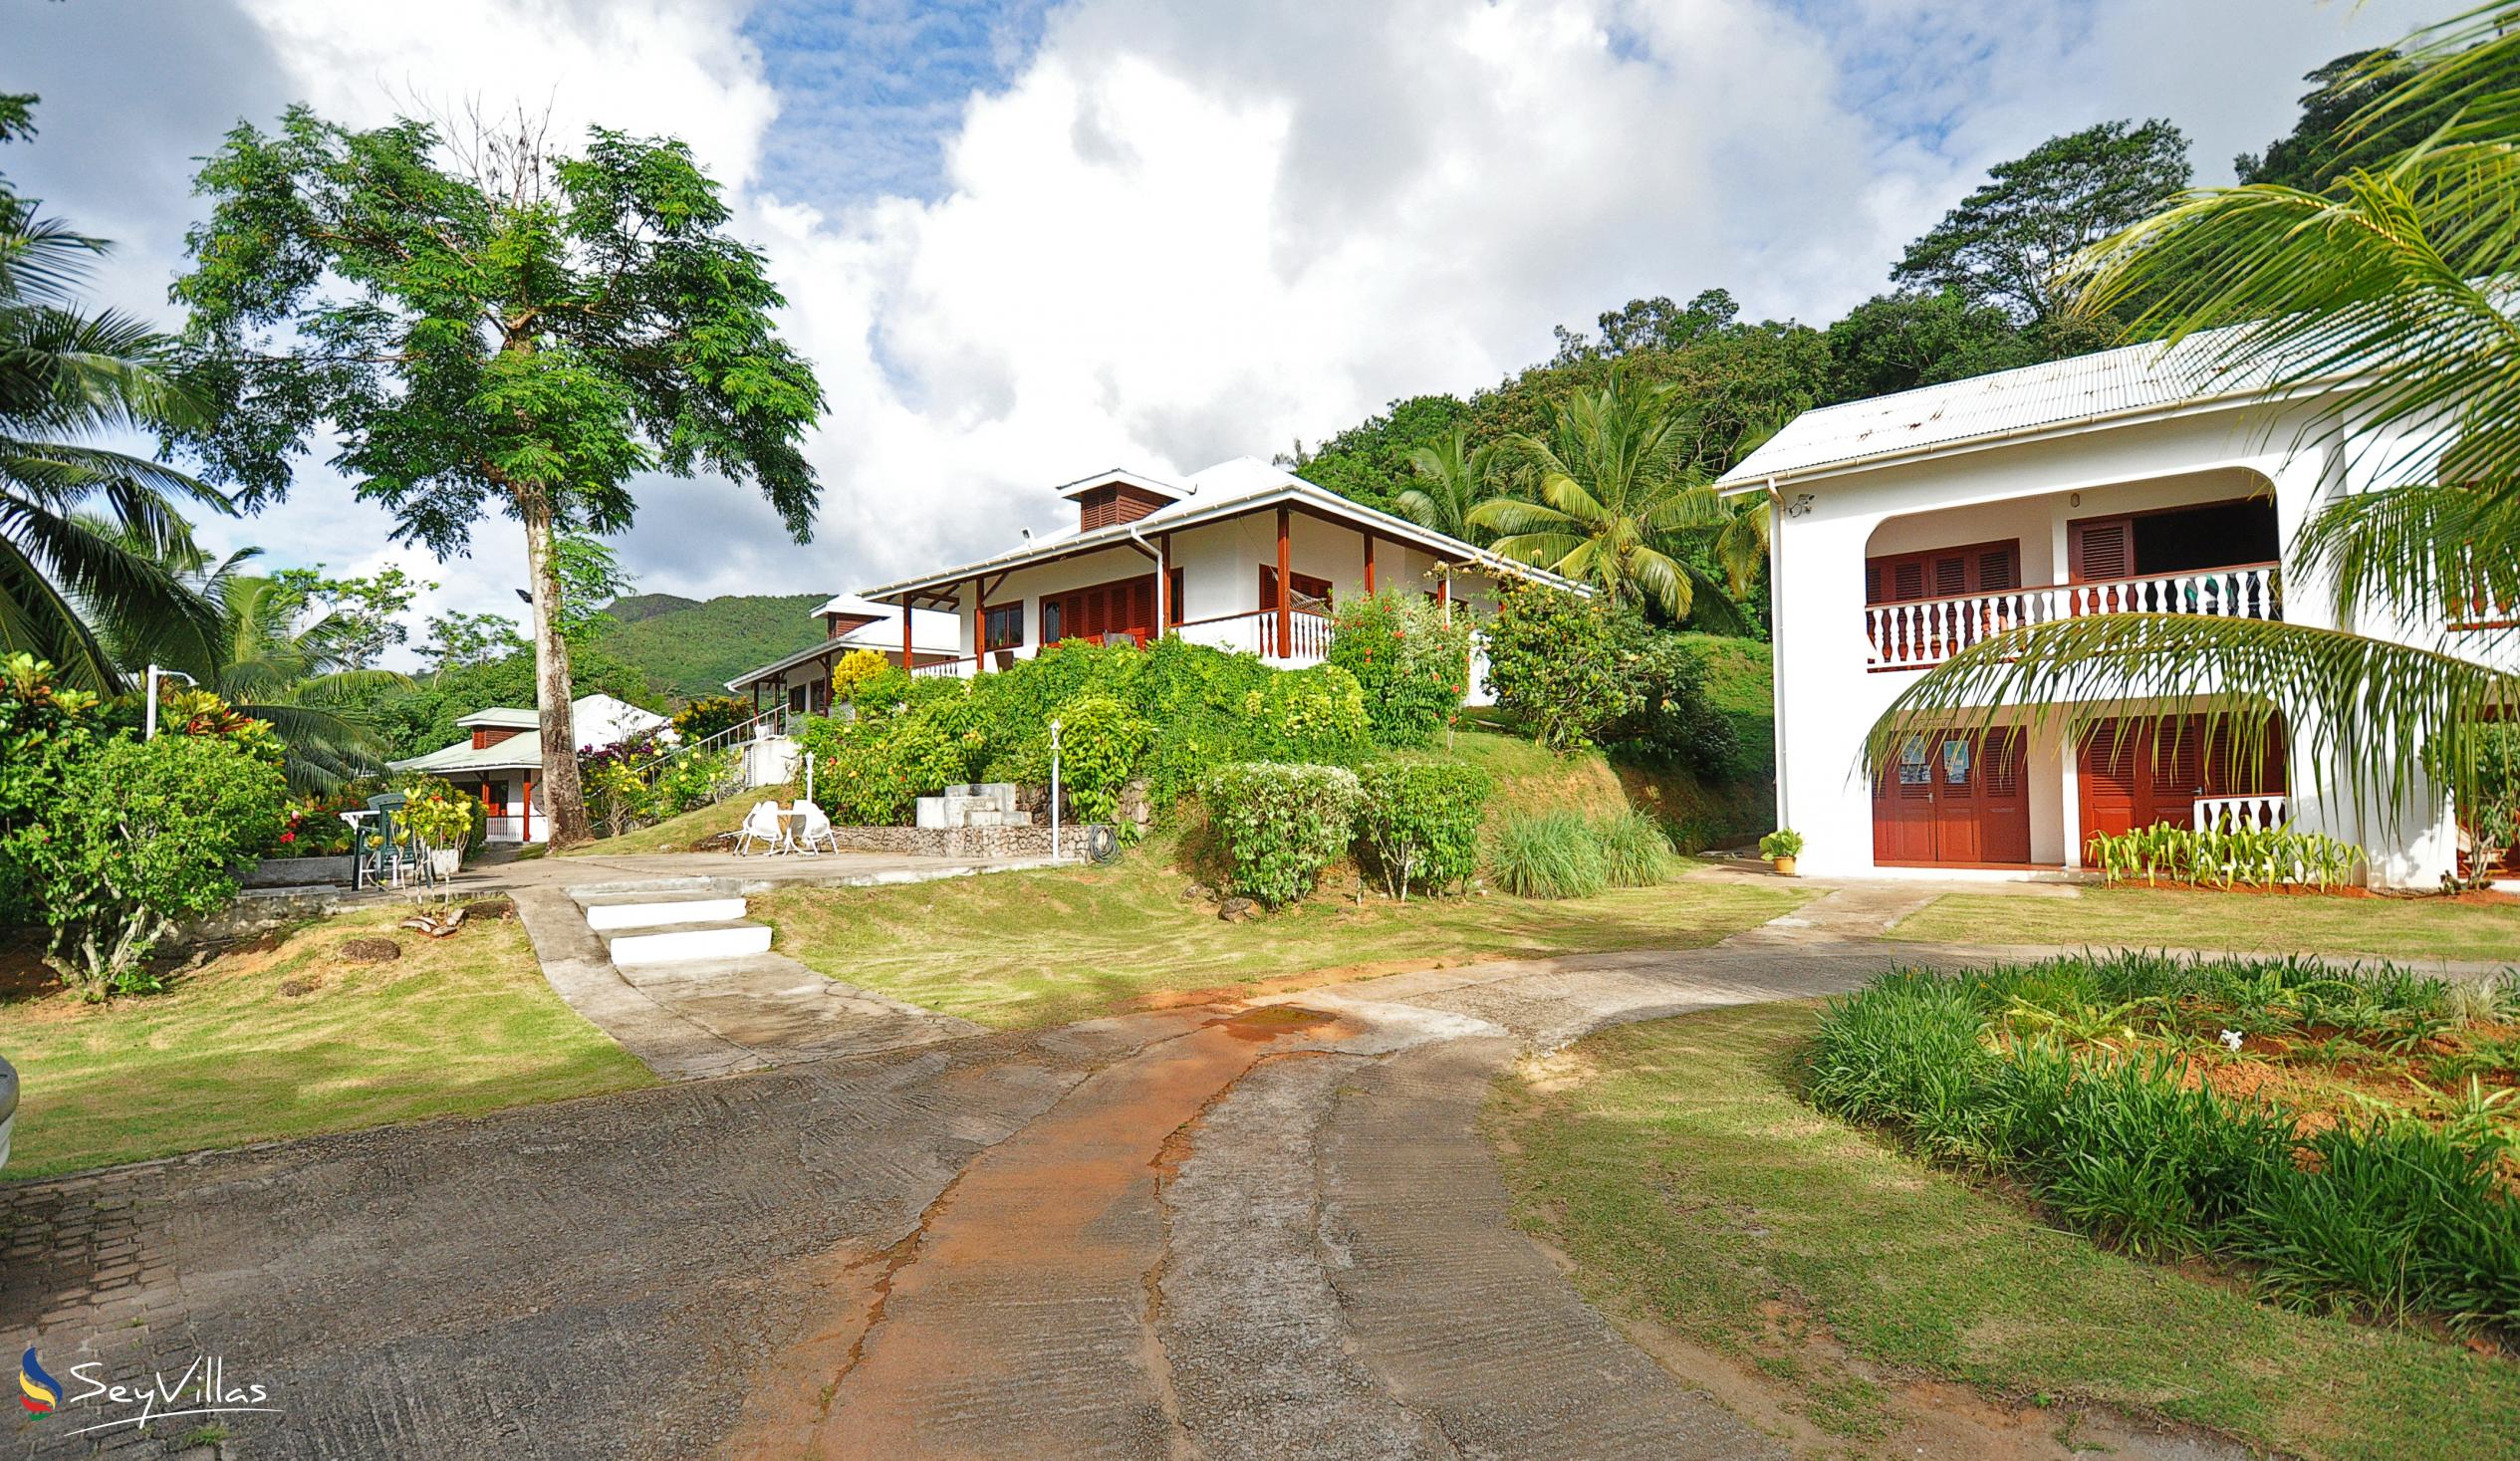 Photo 1: La Résidence - Outdoor area - Mahé (Seychelles)